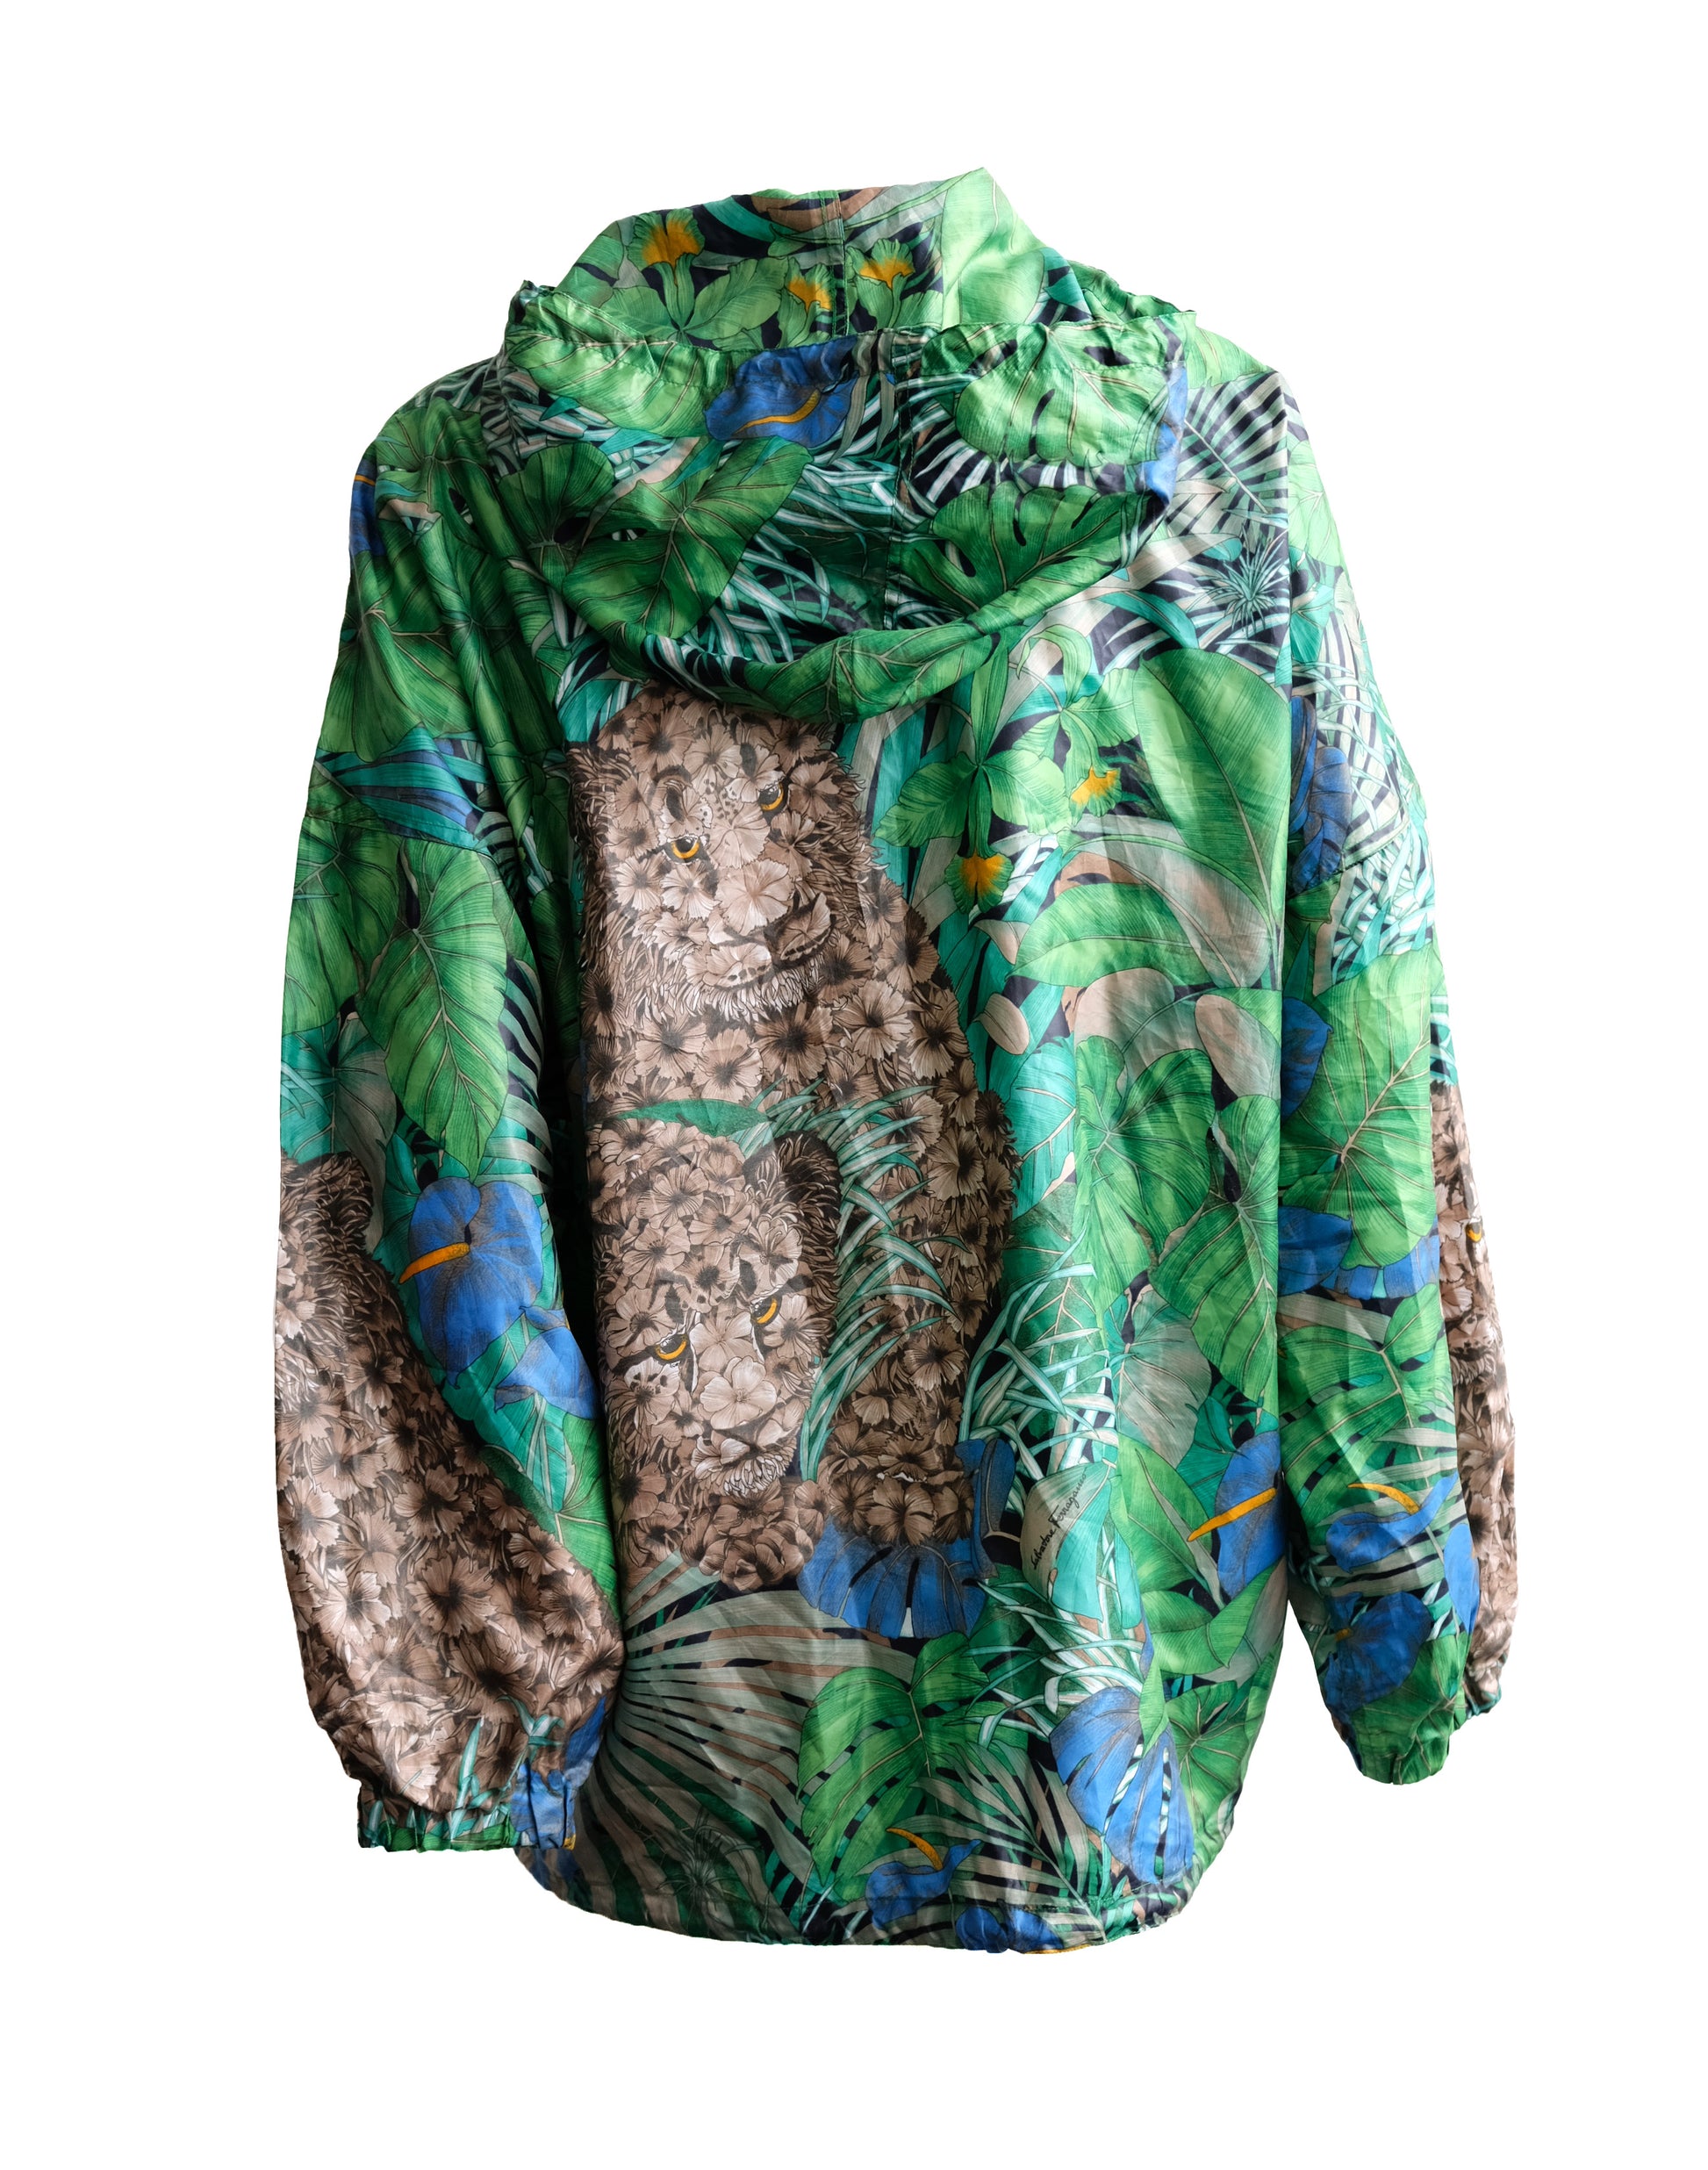 Salvatore Ferragamo Vintage Hooded Blouson Jacket in Green Jungle Print, M-L